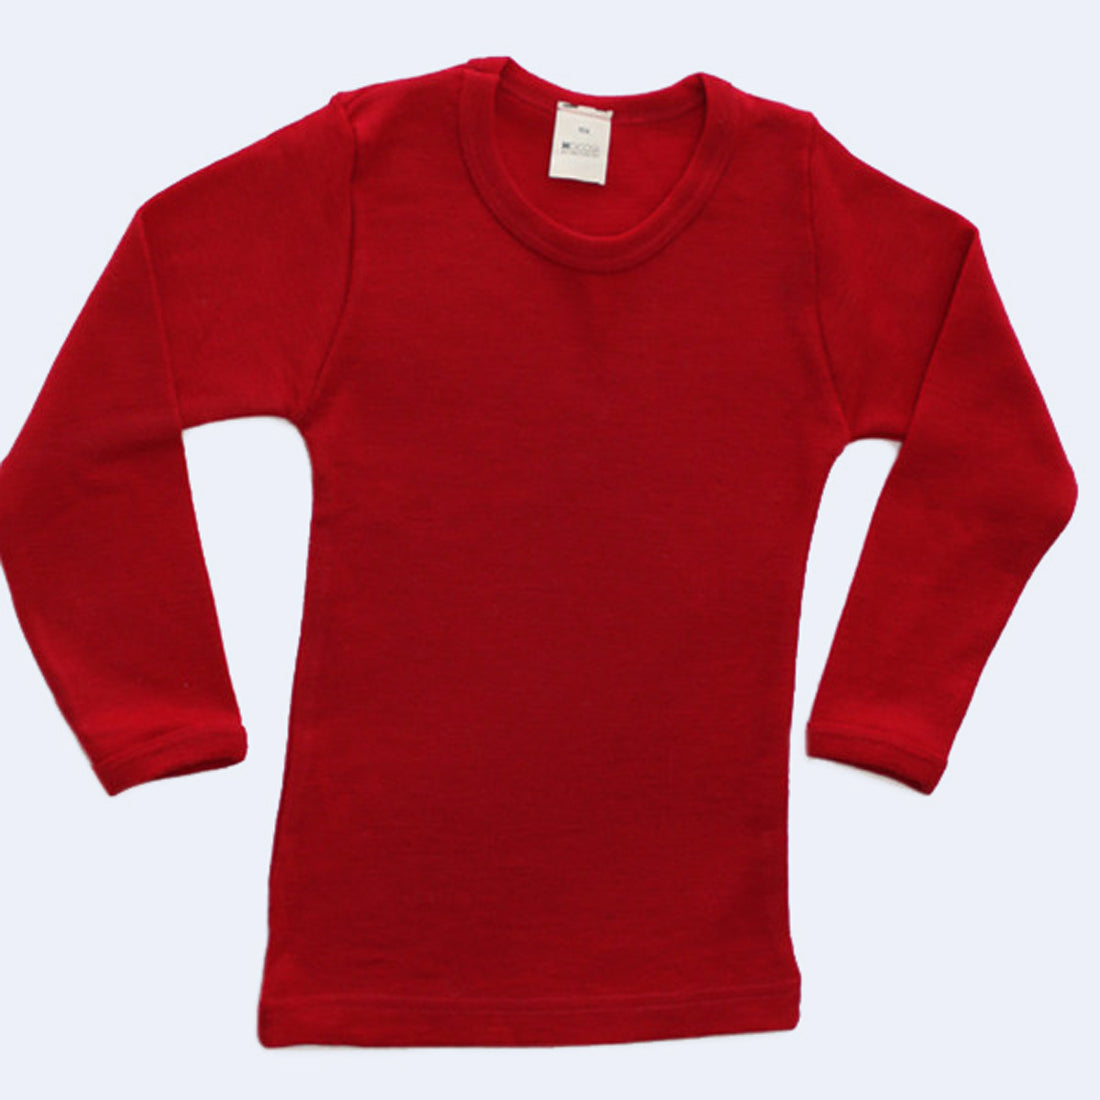 Hocosa Little Kids Organic Wool Long-Underwear Pants 8 Years Solid Red